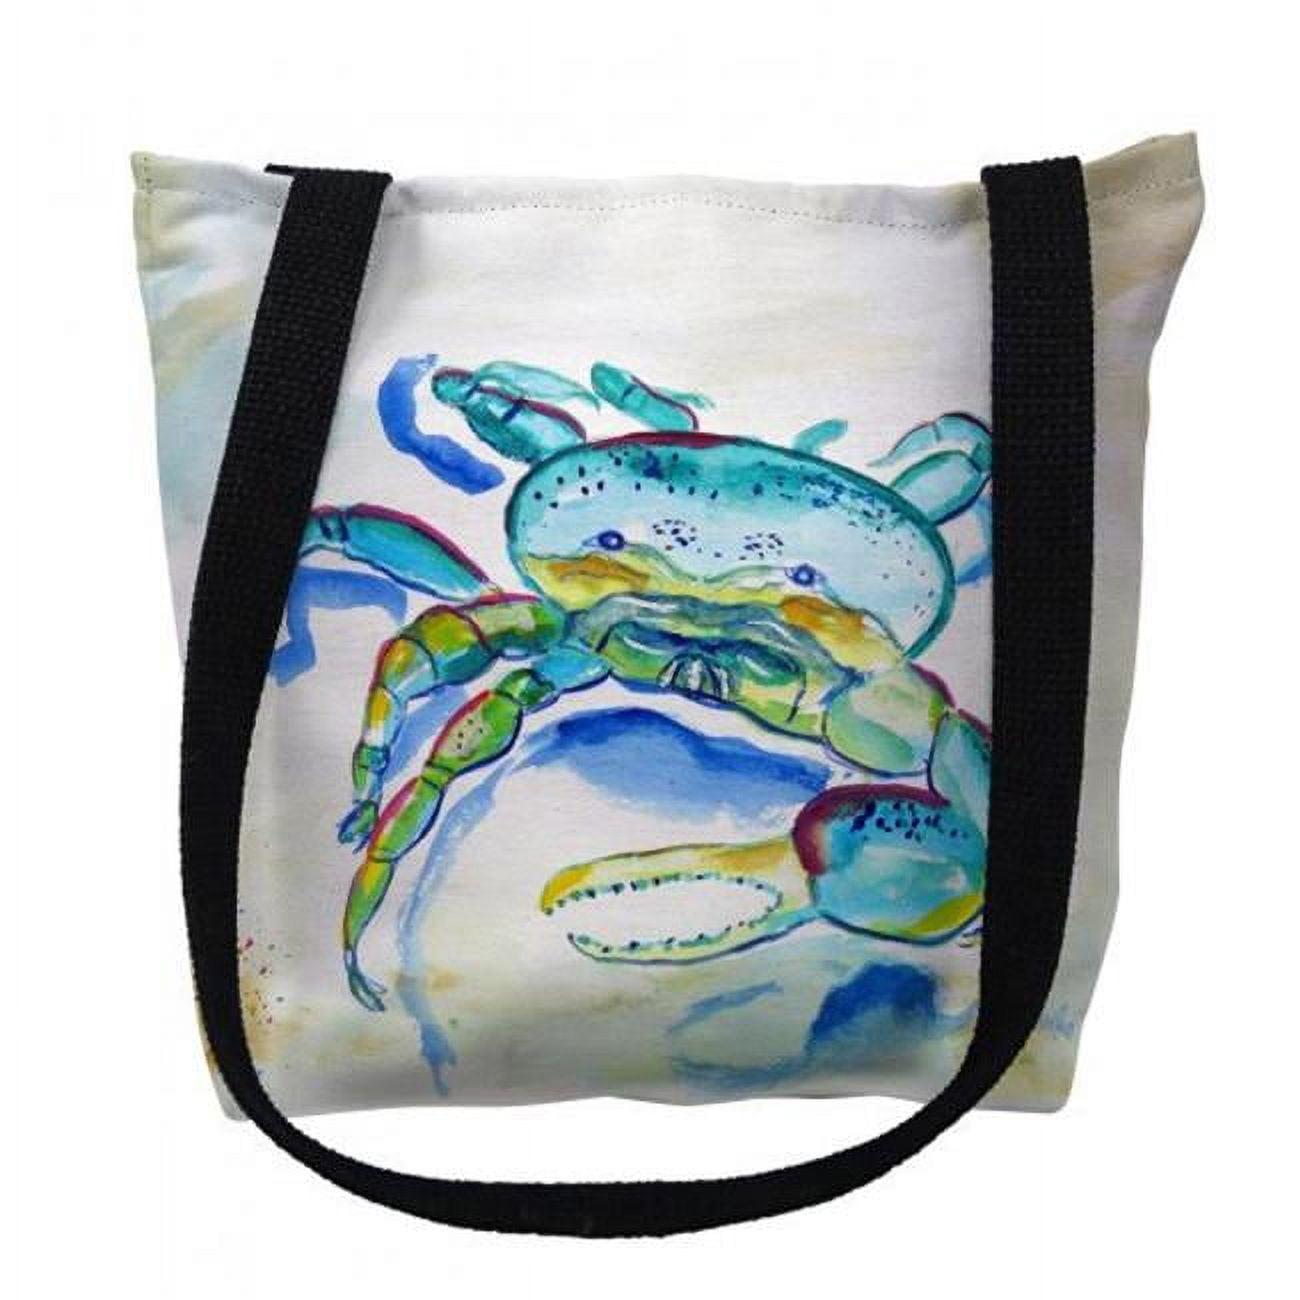 Ty1014m 16 X 16 In. Blue Fiddler Crab Tote Bag - Medium